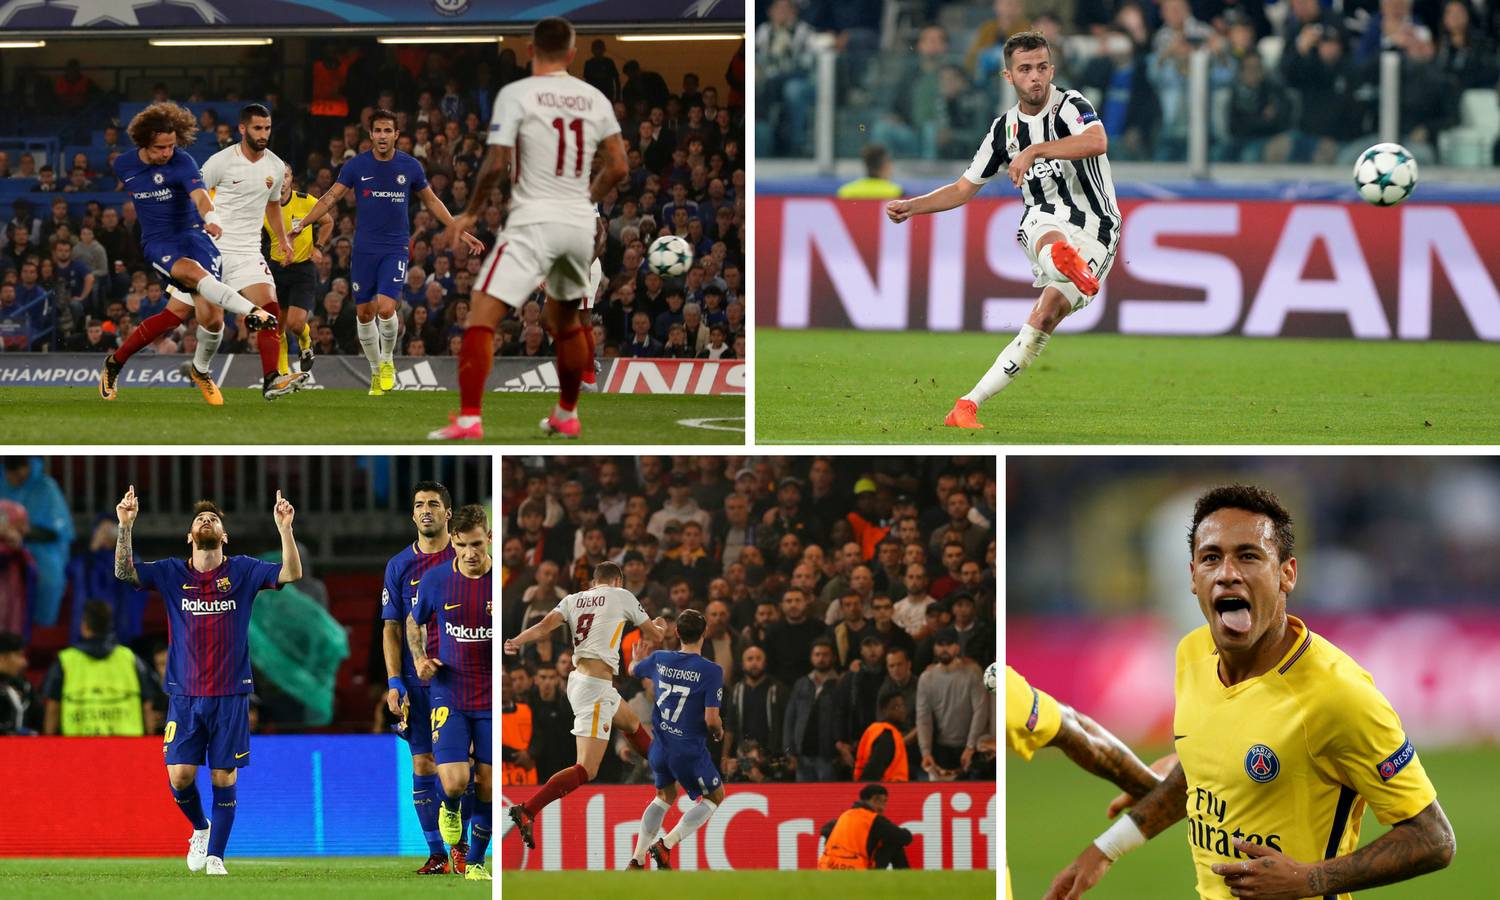 Večer eurogolova: Luiz, Pjanić, Leo Messi, Džeko ili - Neymar?